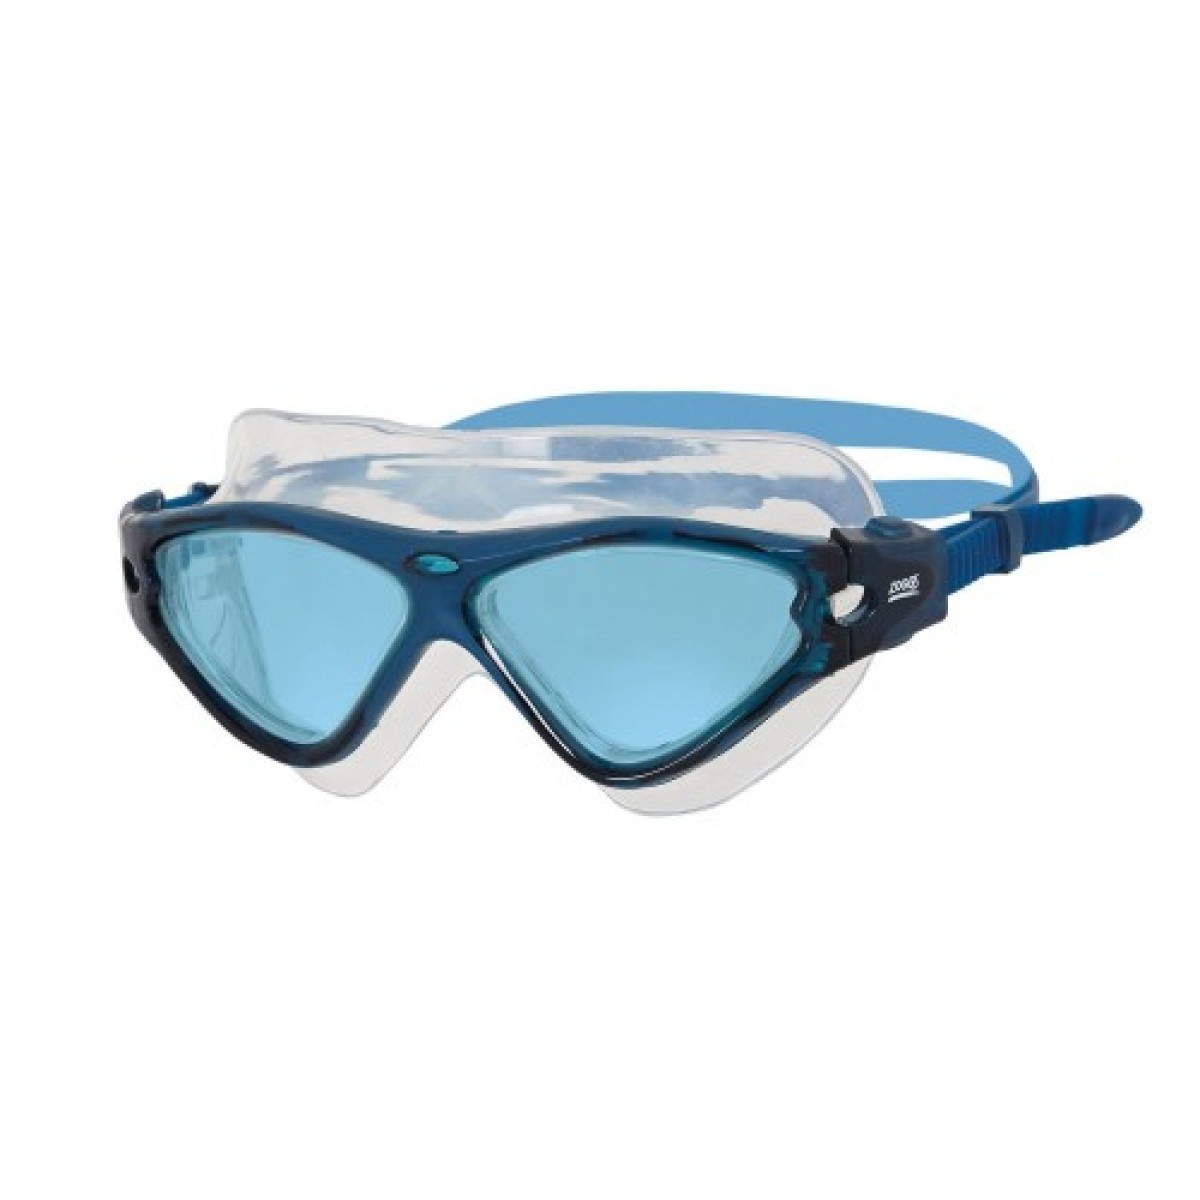 Swimming goggles Tri Vision Mask. ZOGGS - view 1